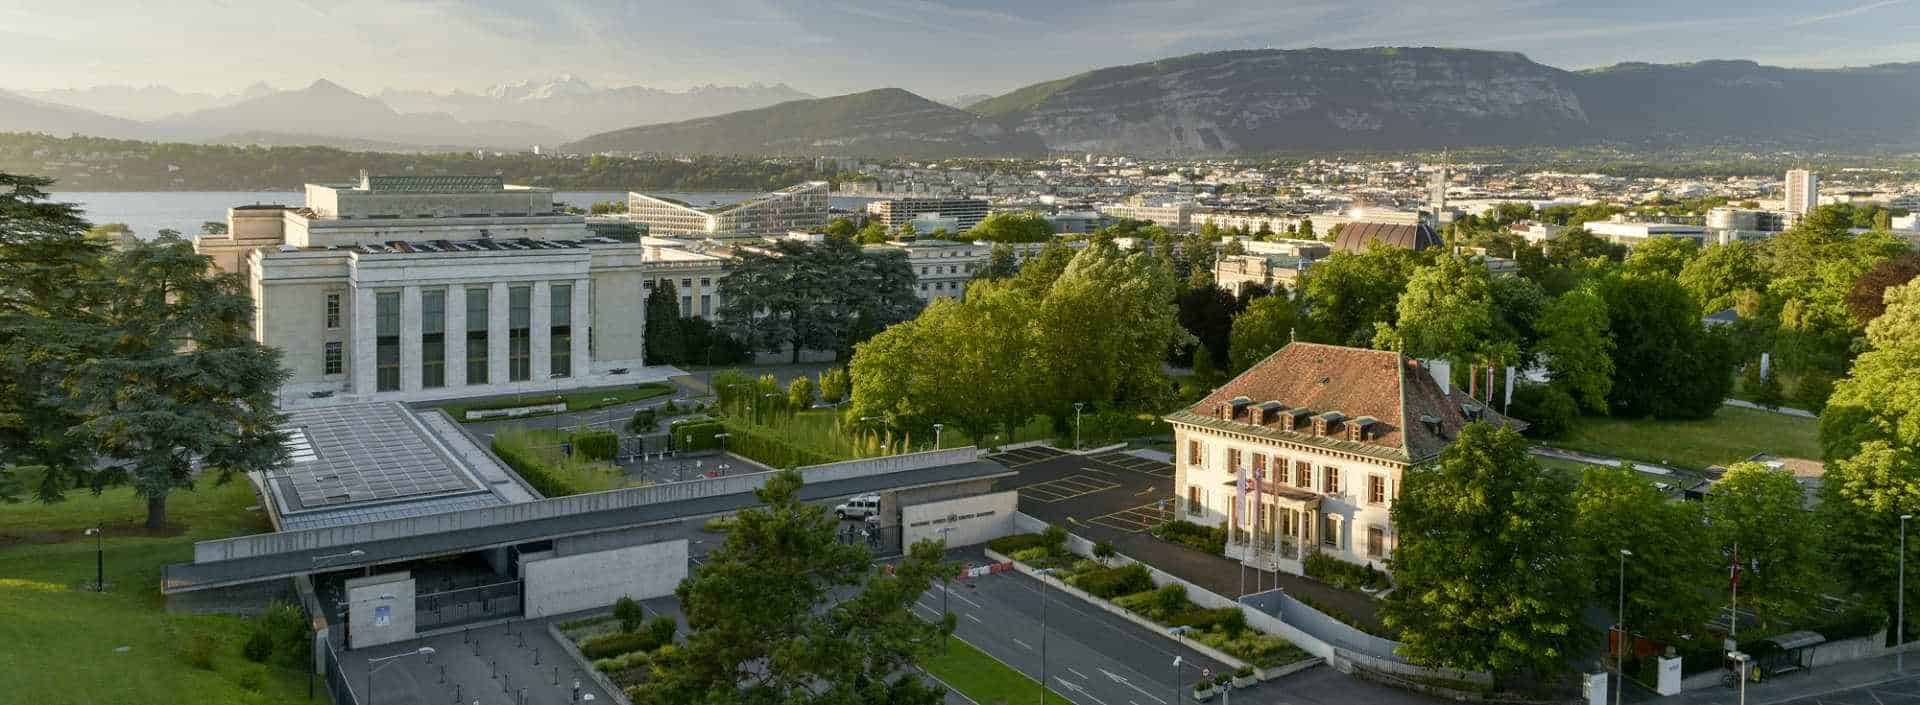 Hotel Management School of Geneva, Switzerland